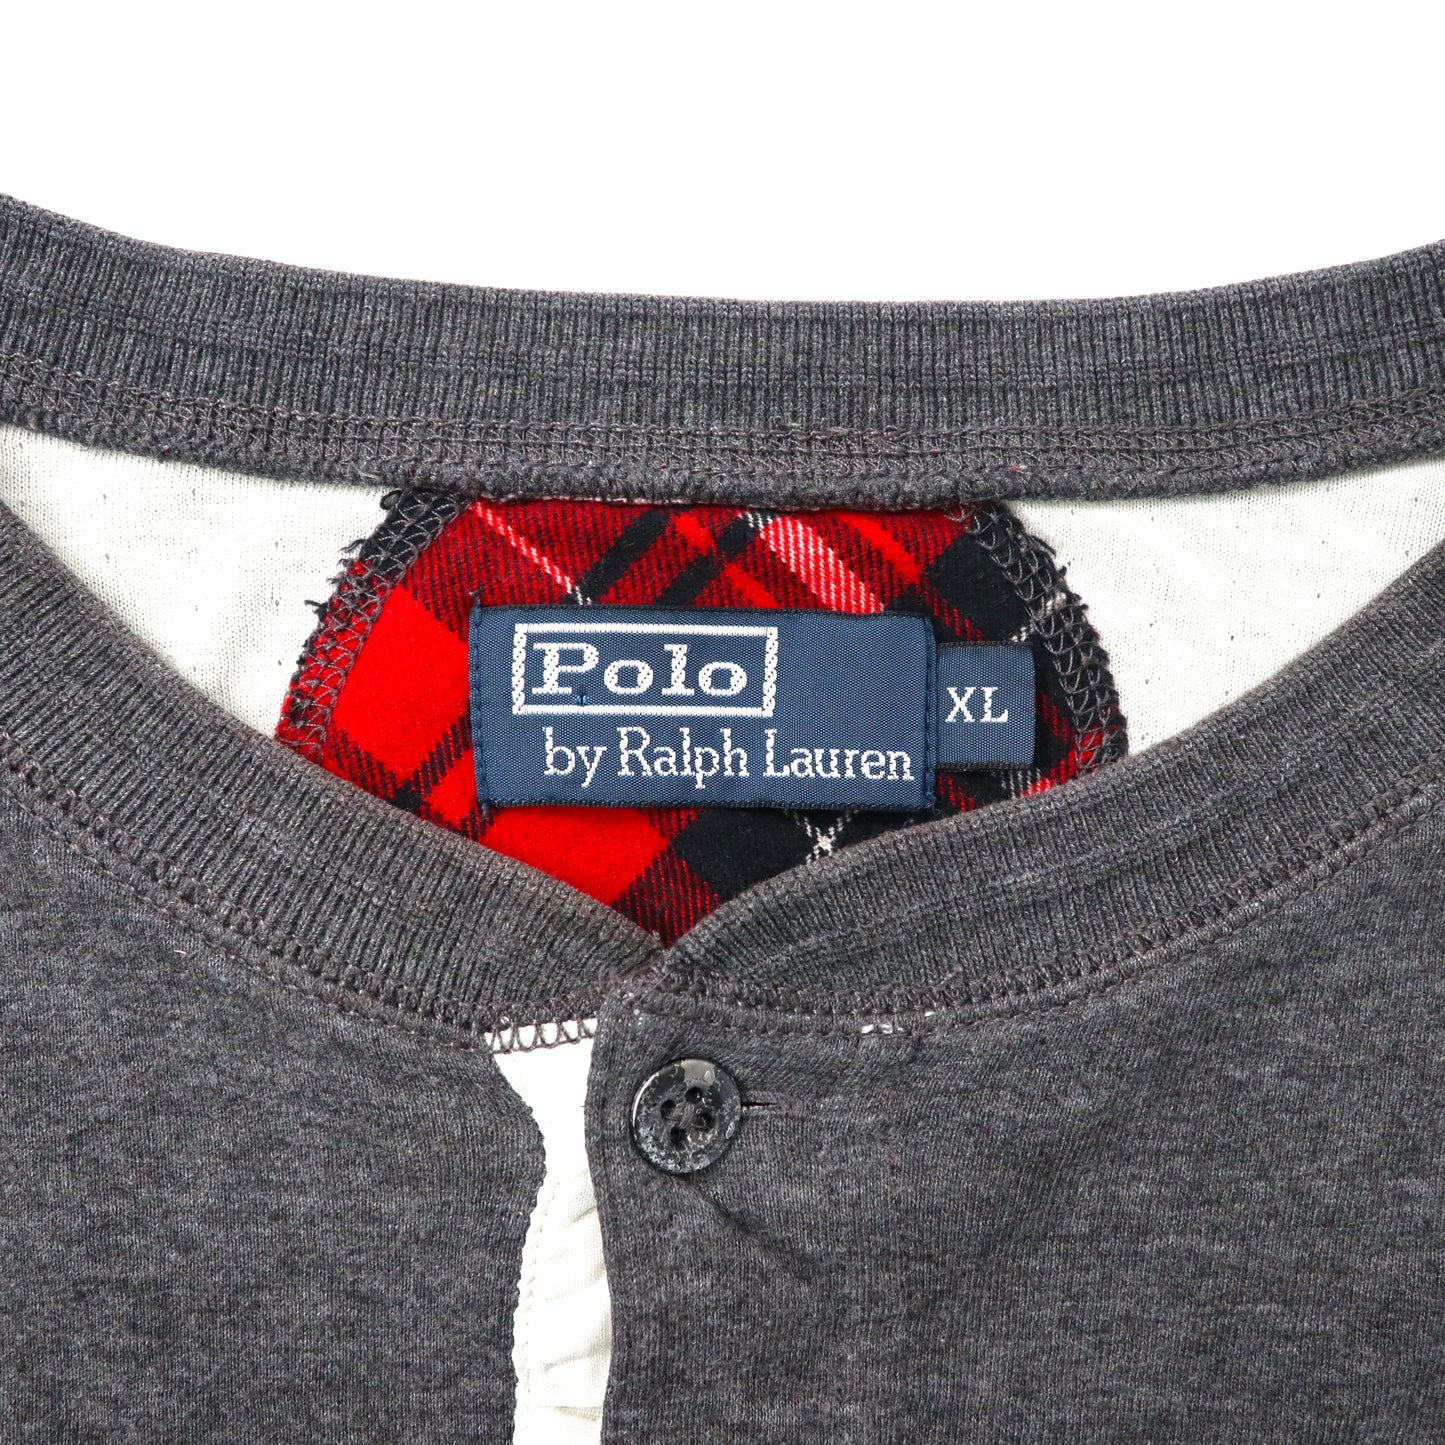 Polo by Ralph Lauren ヘンリーネック ロングスリーブTシャツ XL グレー コットン ビッグサイズ